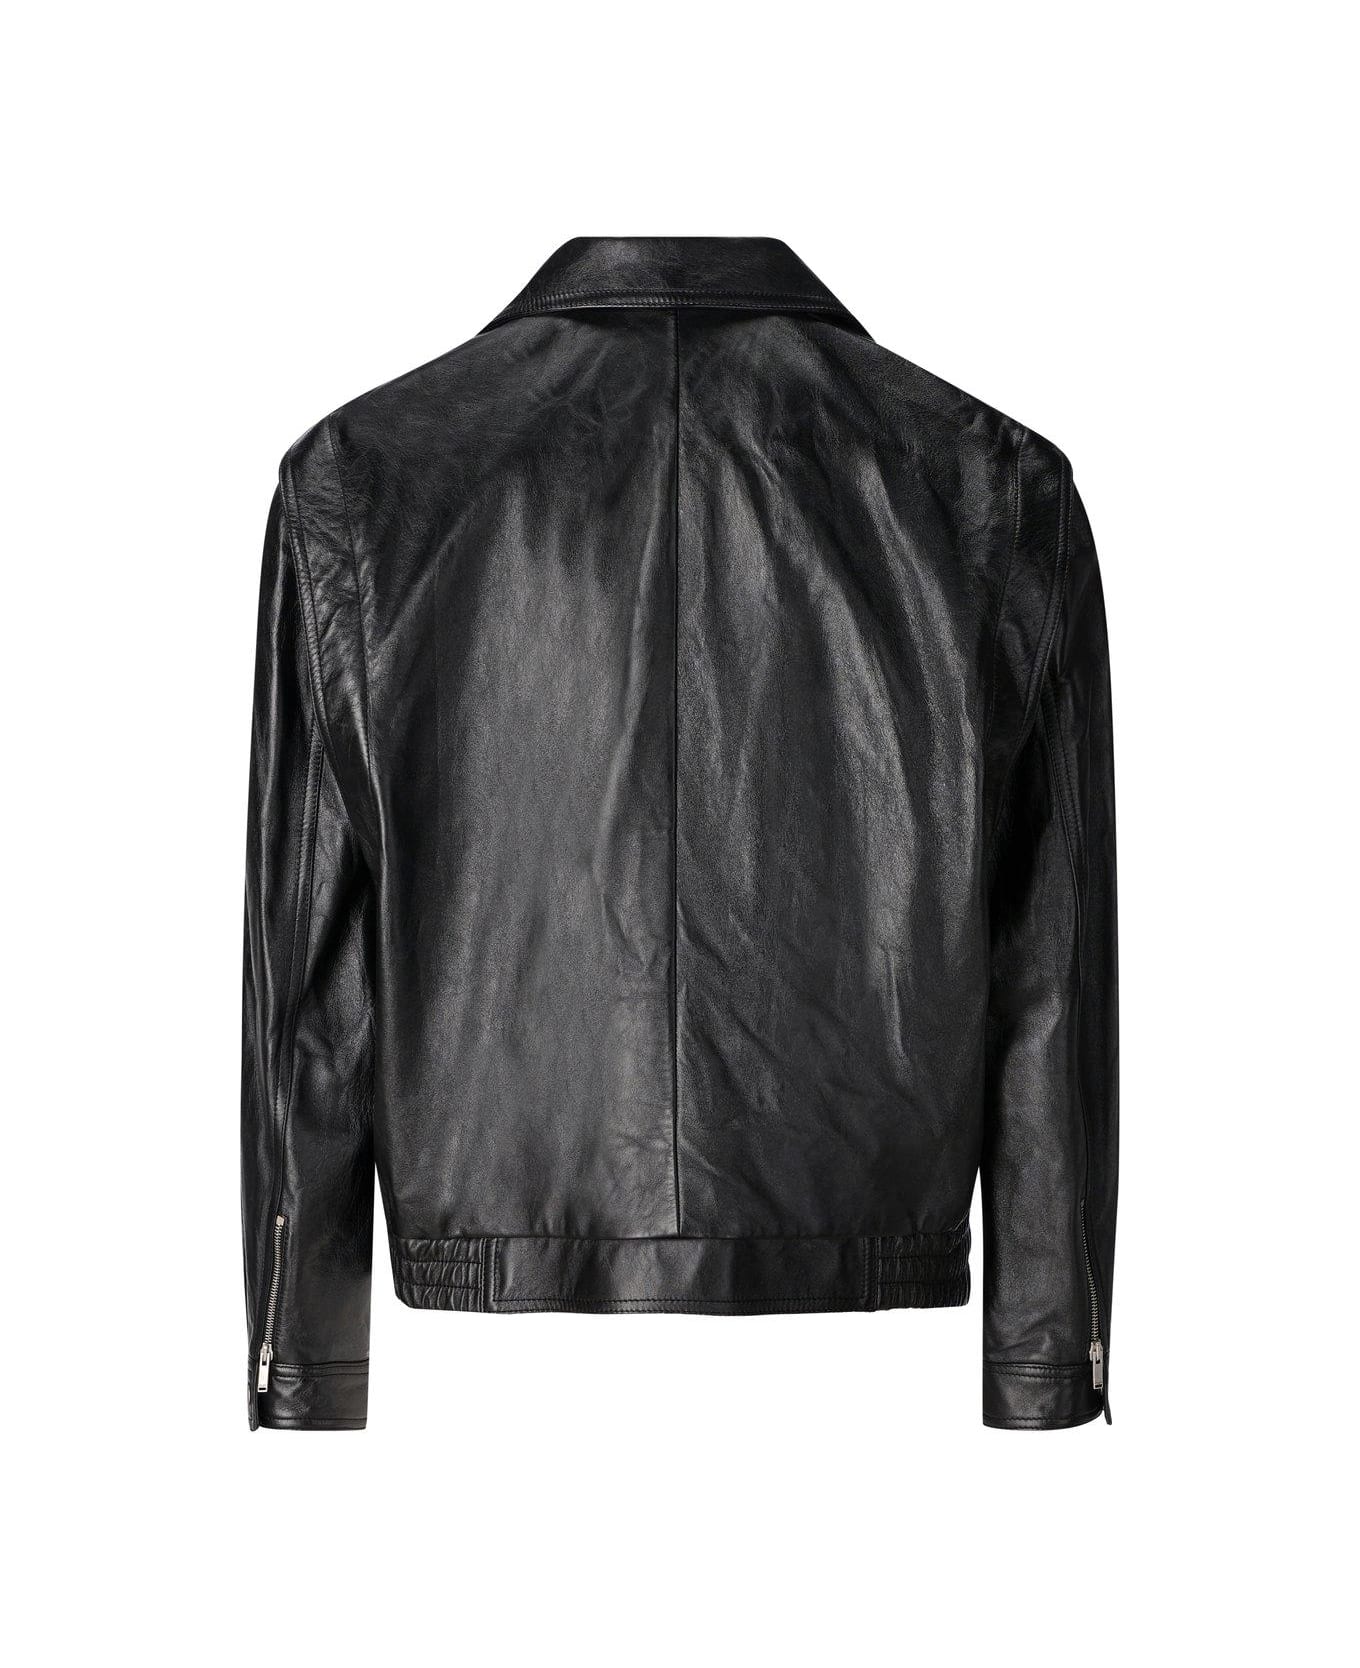 Saint Laurent Biker Leather Jacket レザージャケット